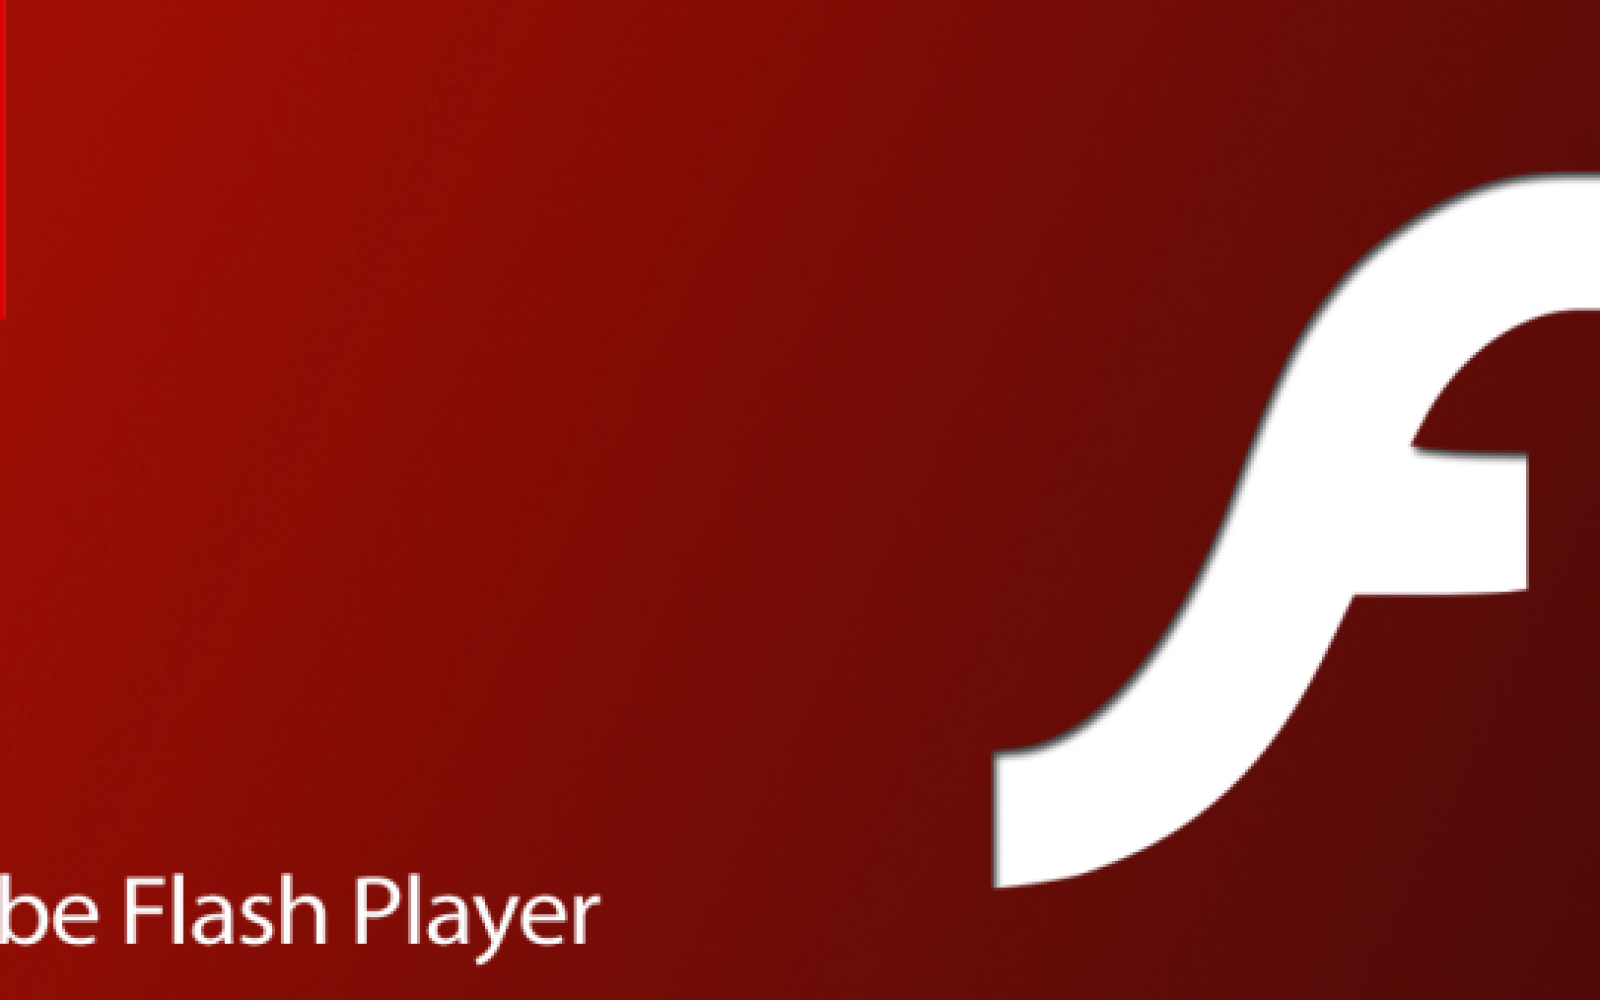 Adobe Flash Player For Mac Reddit